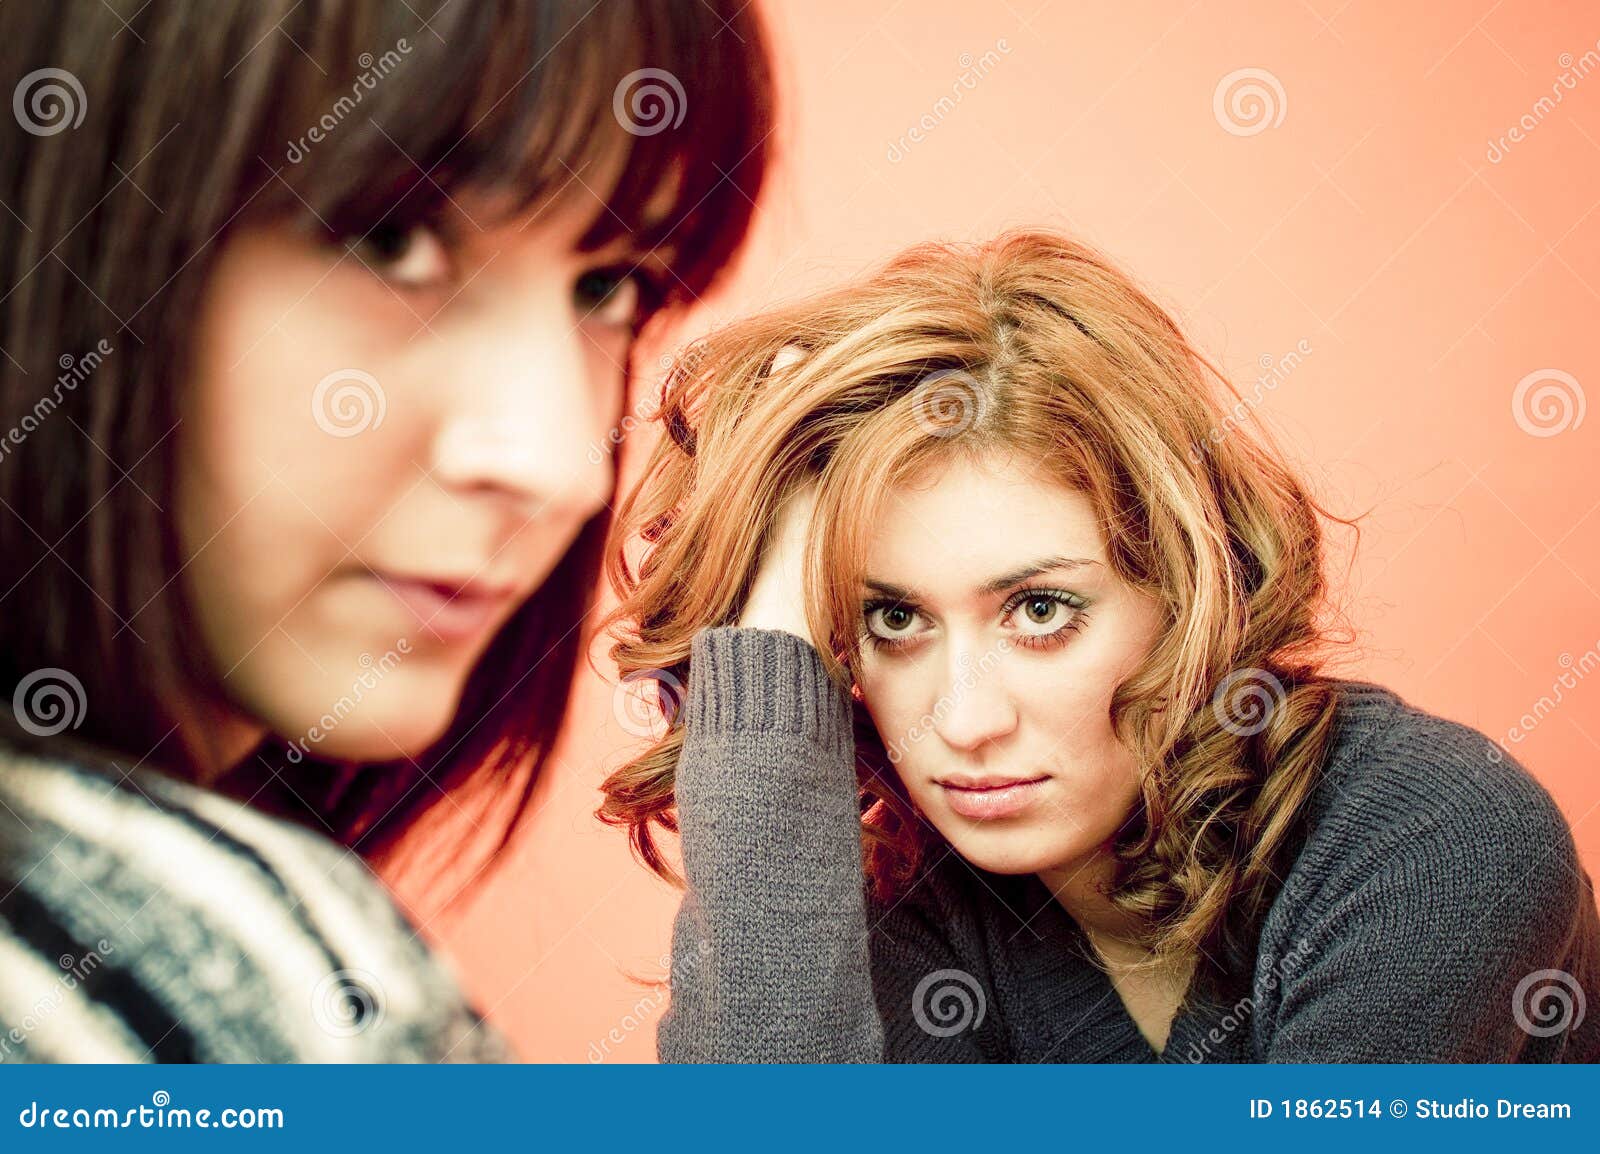 two twenty year old depressed women